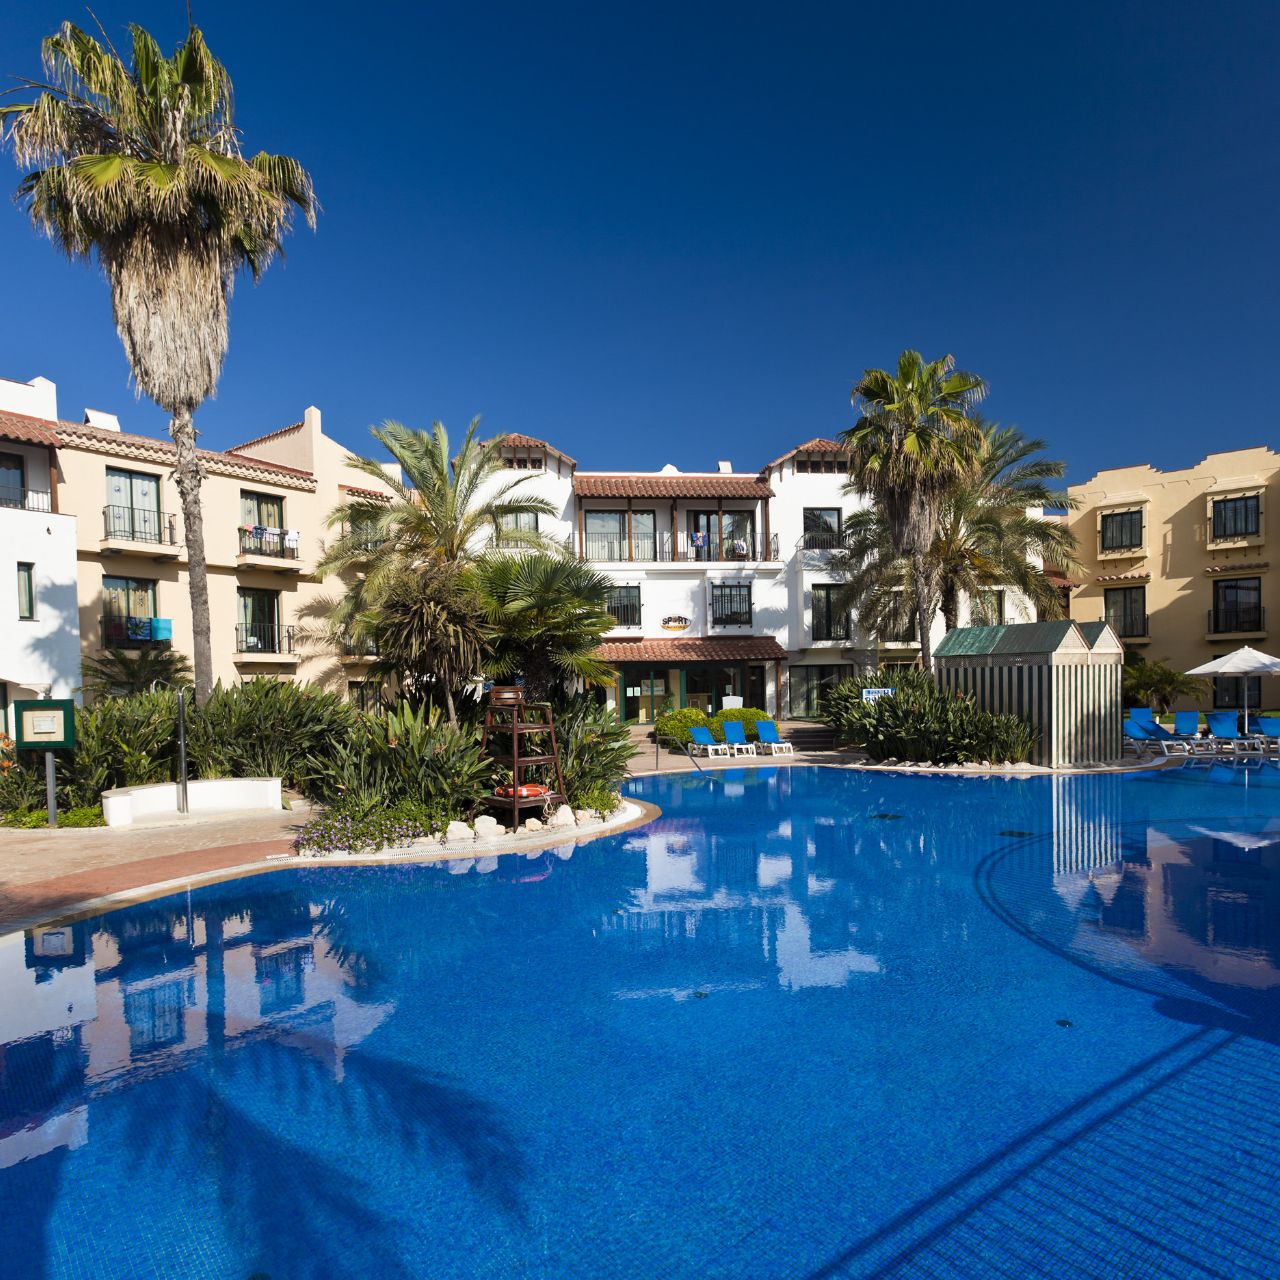 Hotel PortAventura - Theme Park Tickets Included - Salou - HOTEL INFO